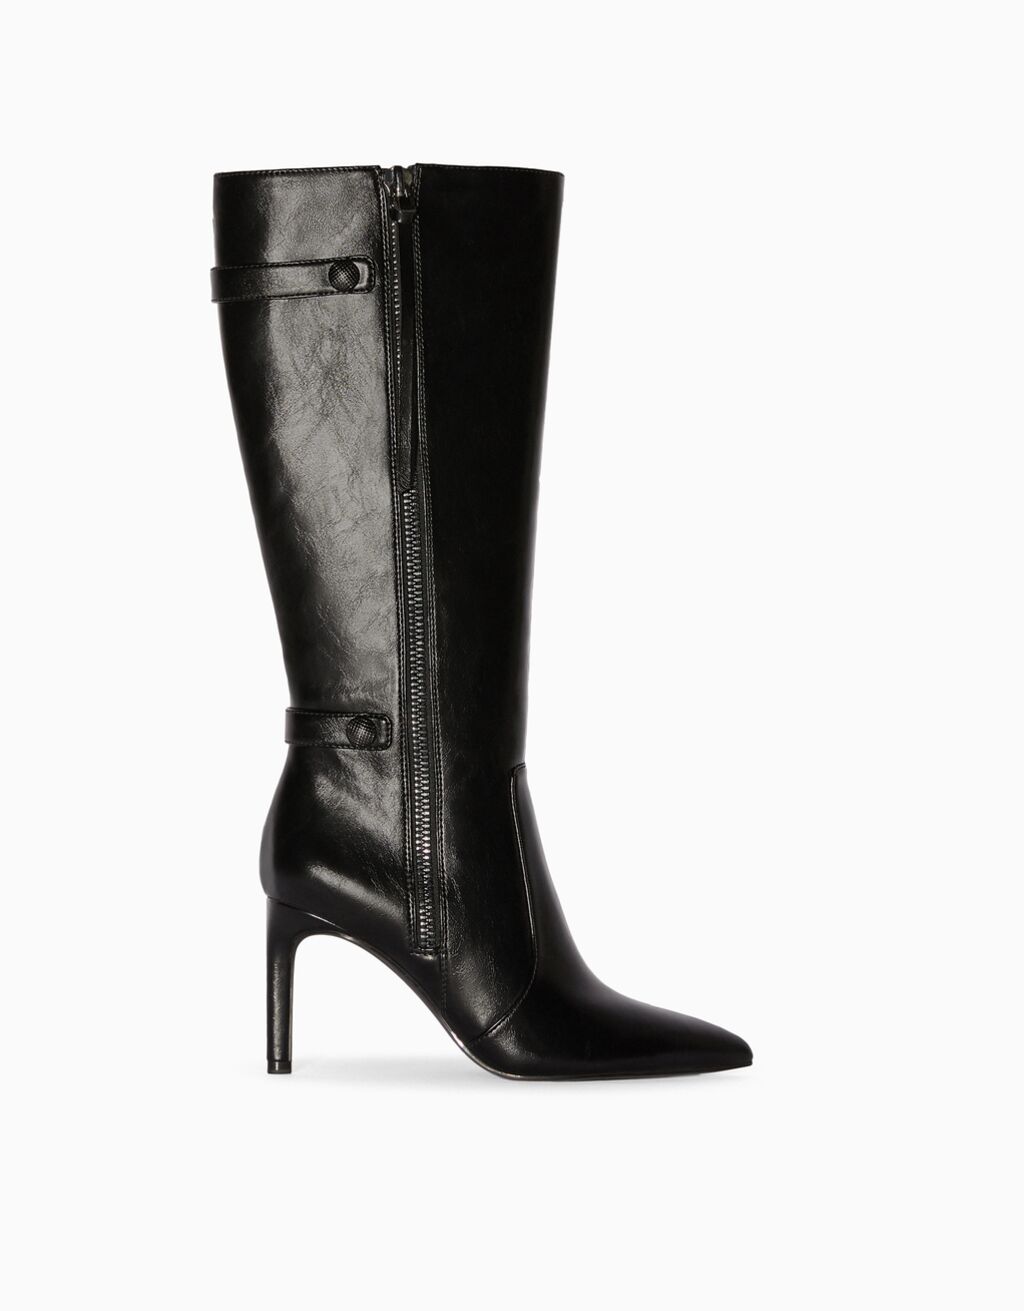 Stiletto heel boots with metallic details